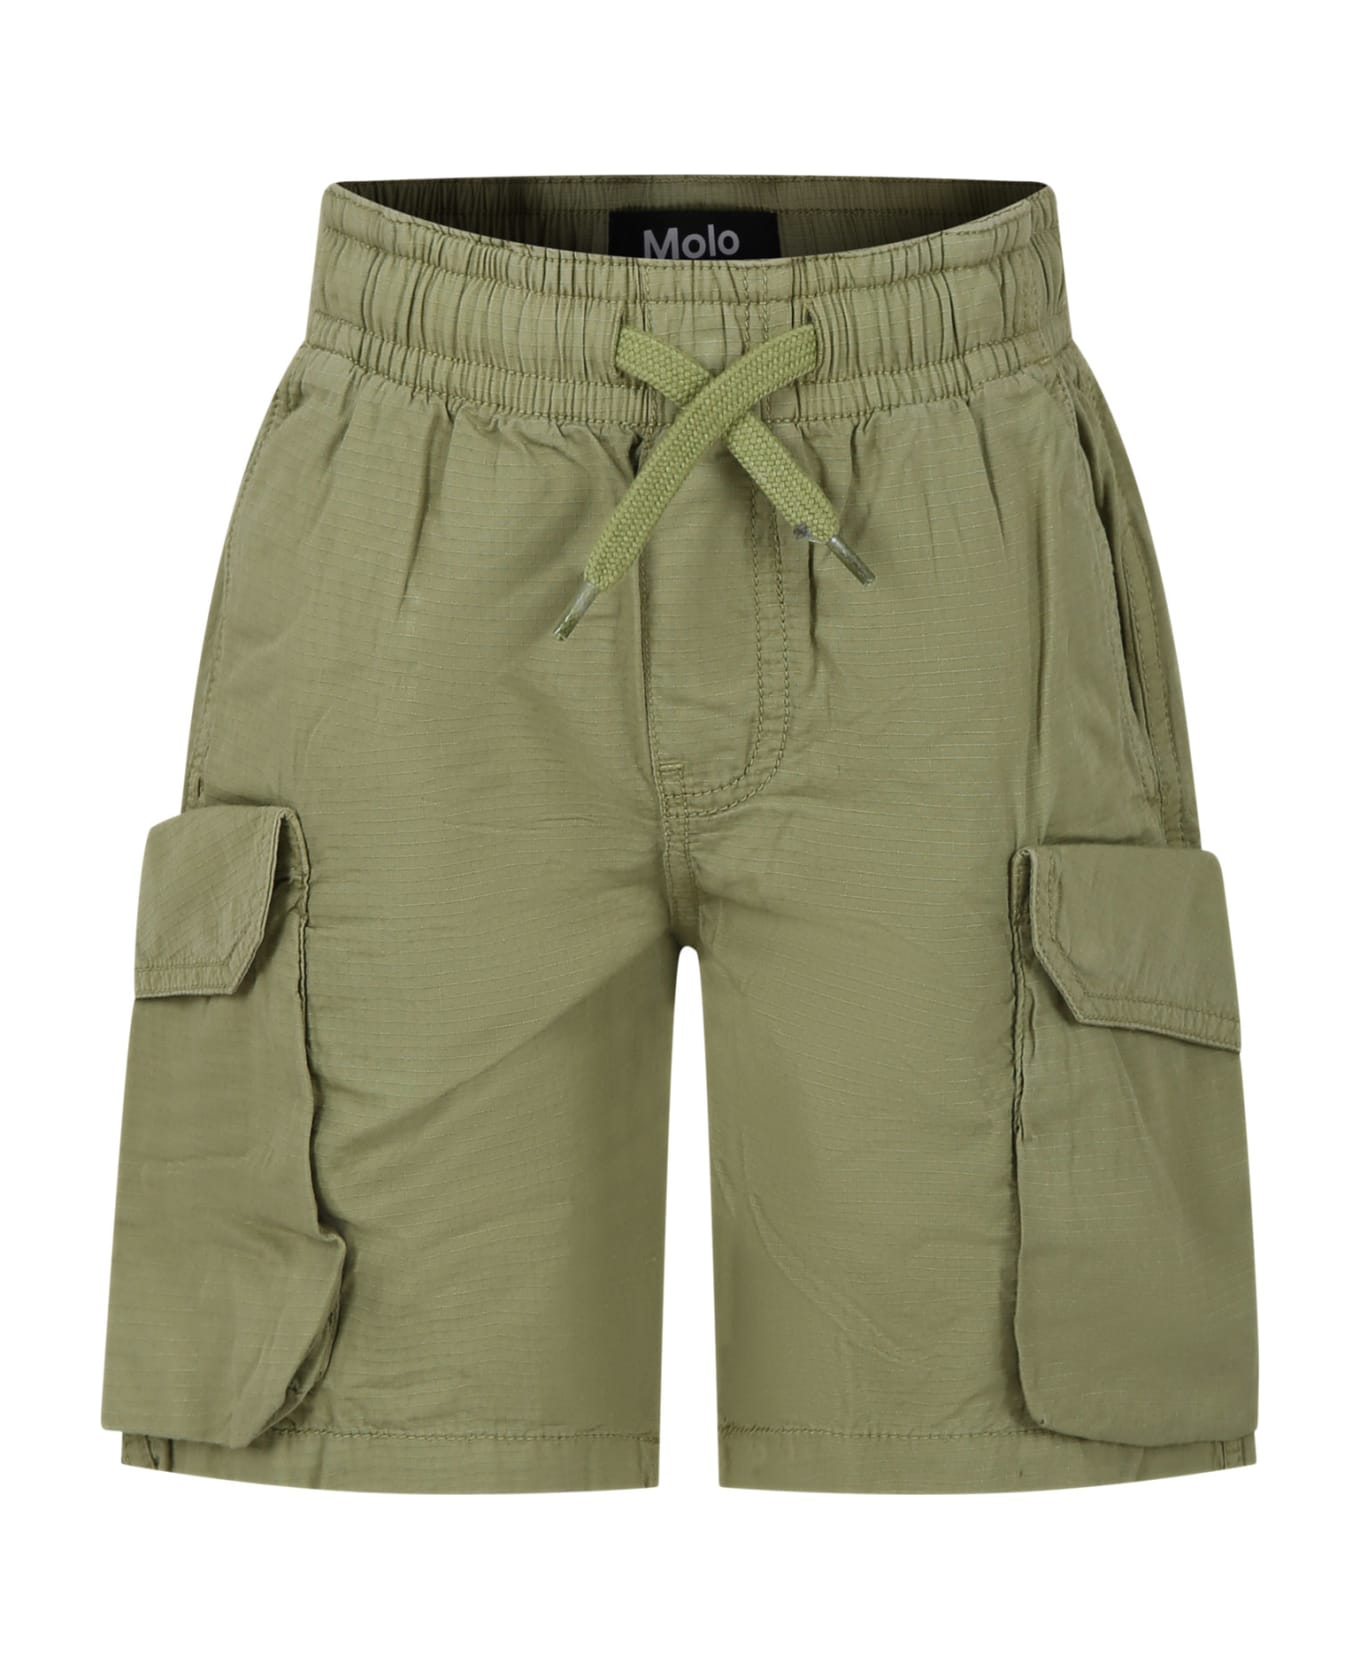 Molo Casual Argod Green Shorts For Boy - Green ボトムス